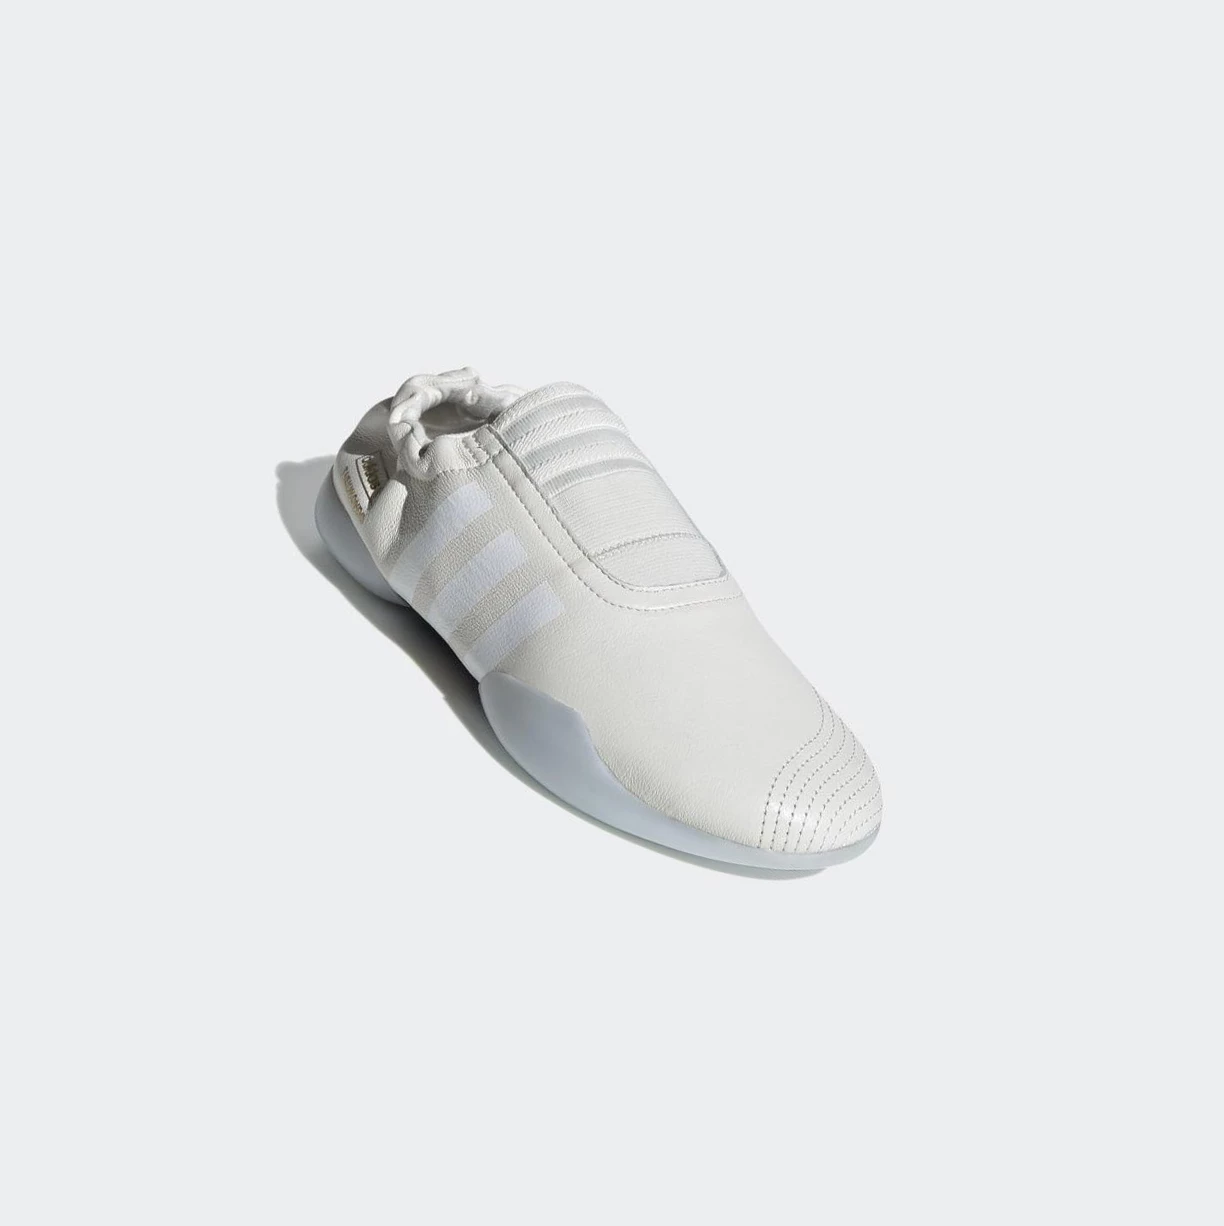 Originálne Topánky Adidas Taekwondo Damske Biele | 849SKDPYMLJ